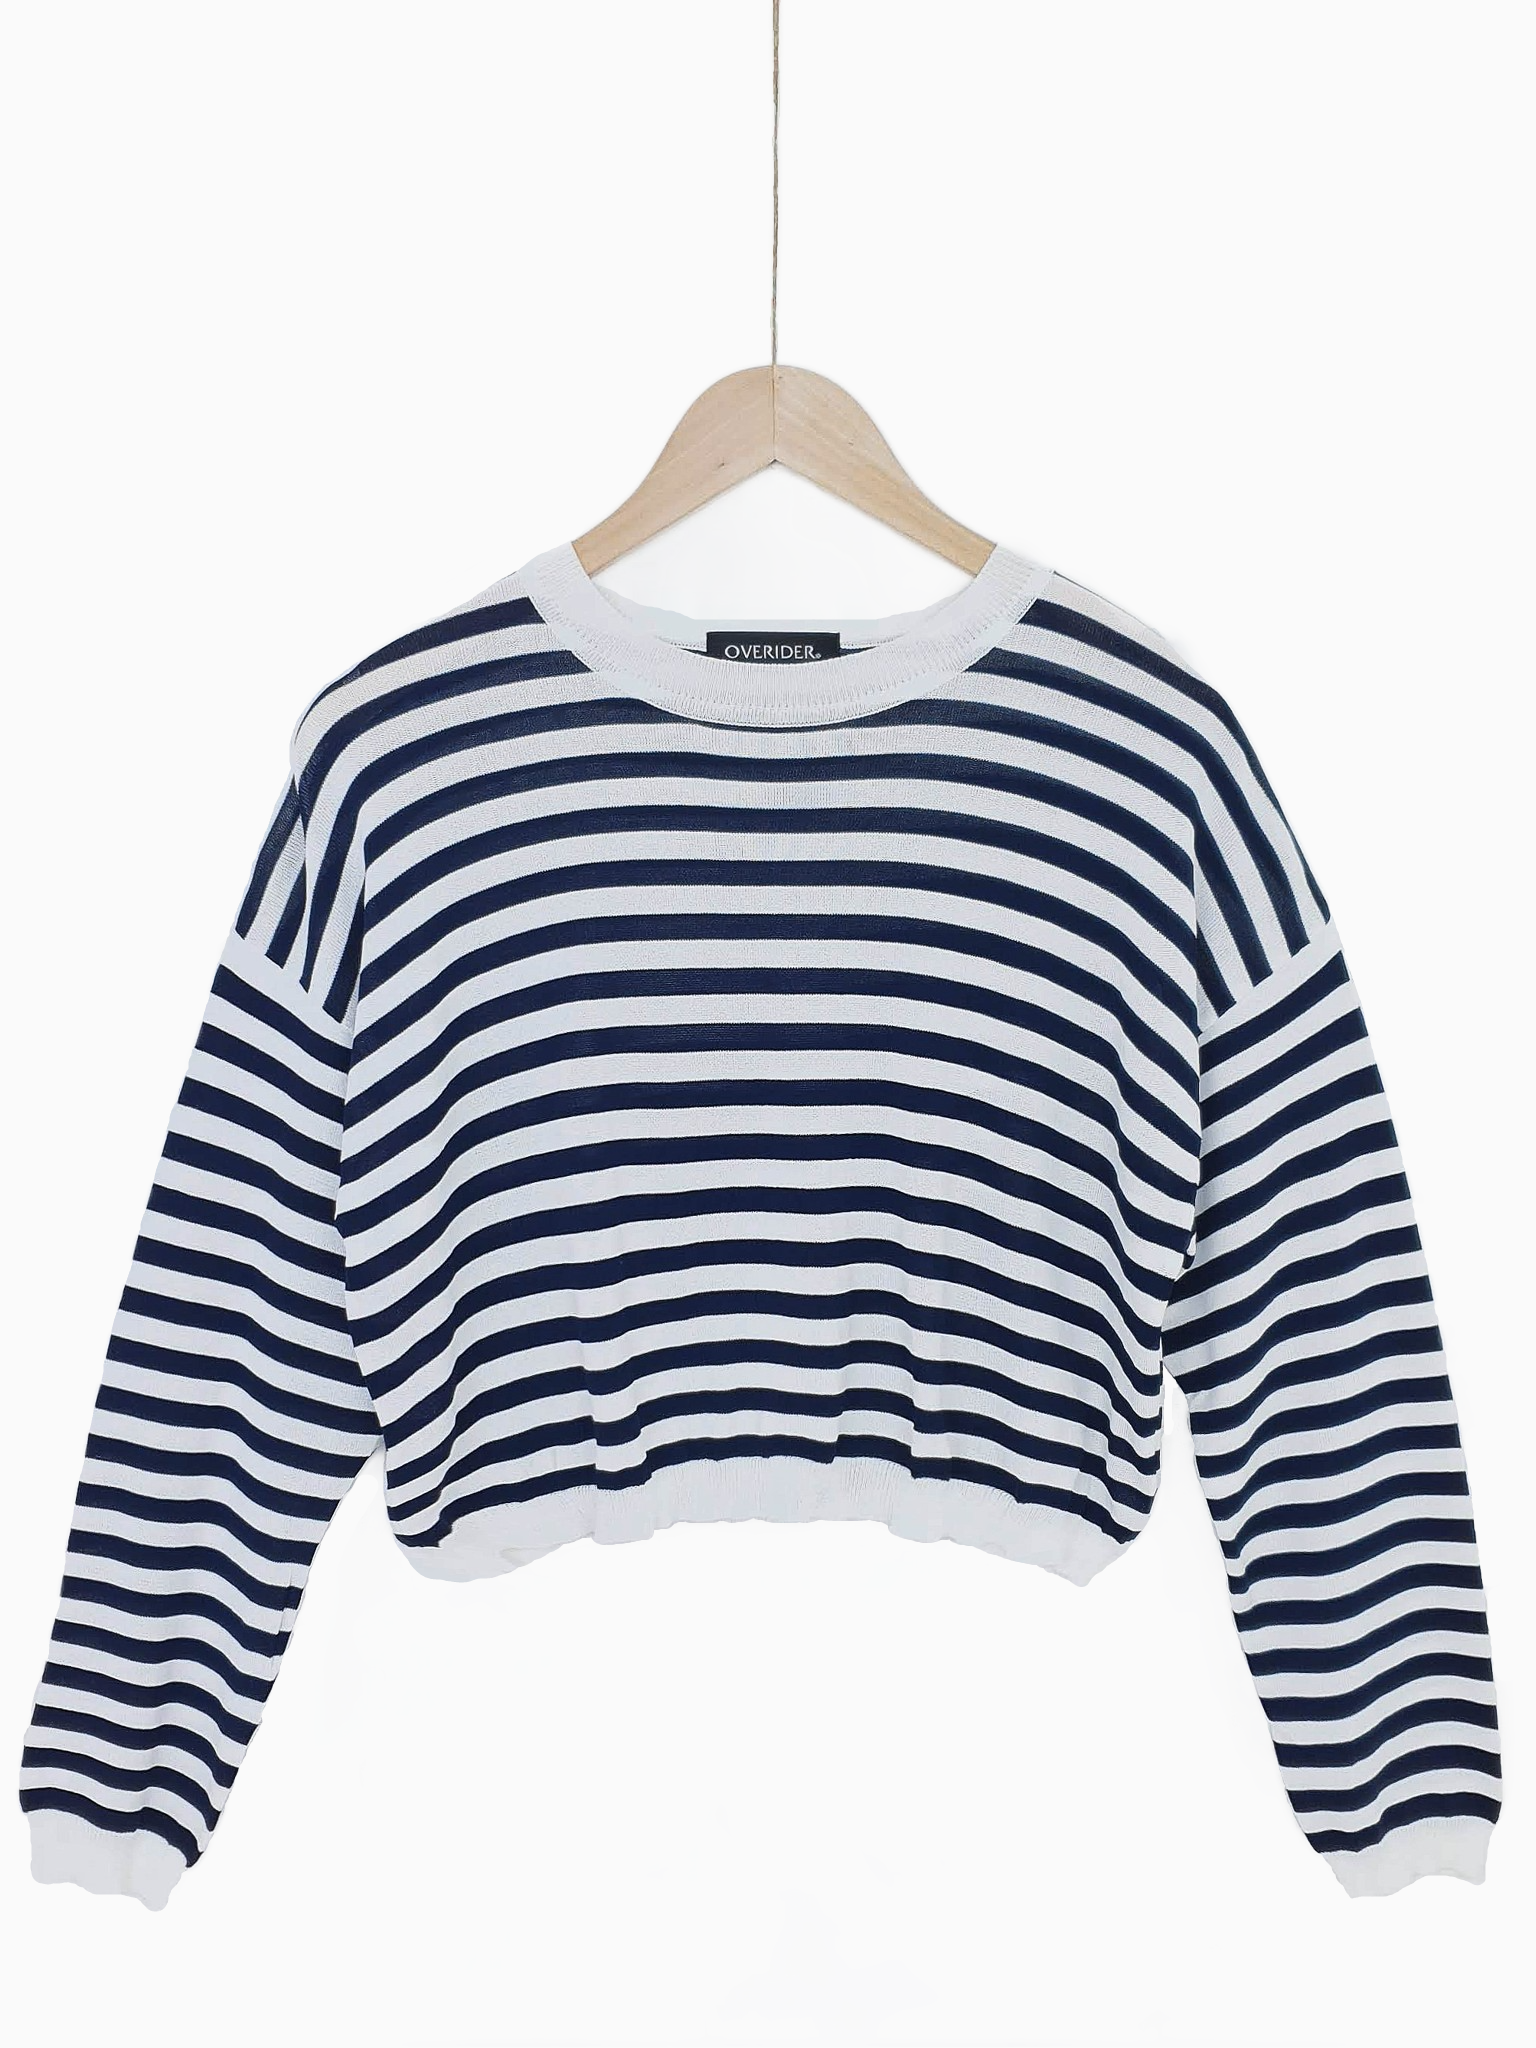 TOVA | Breton Sweater Top | Navy